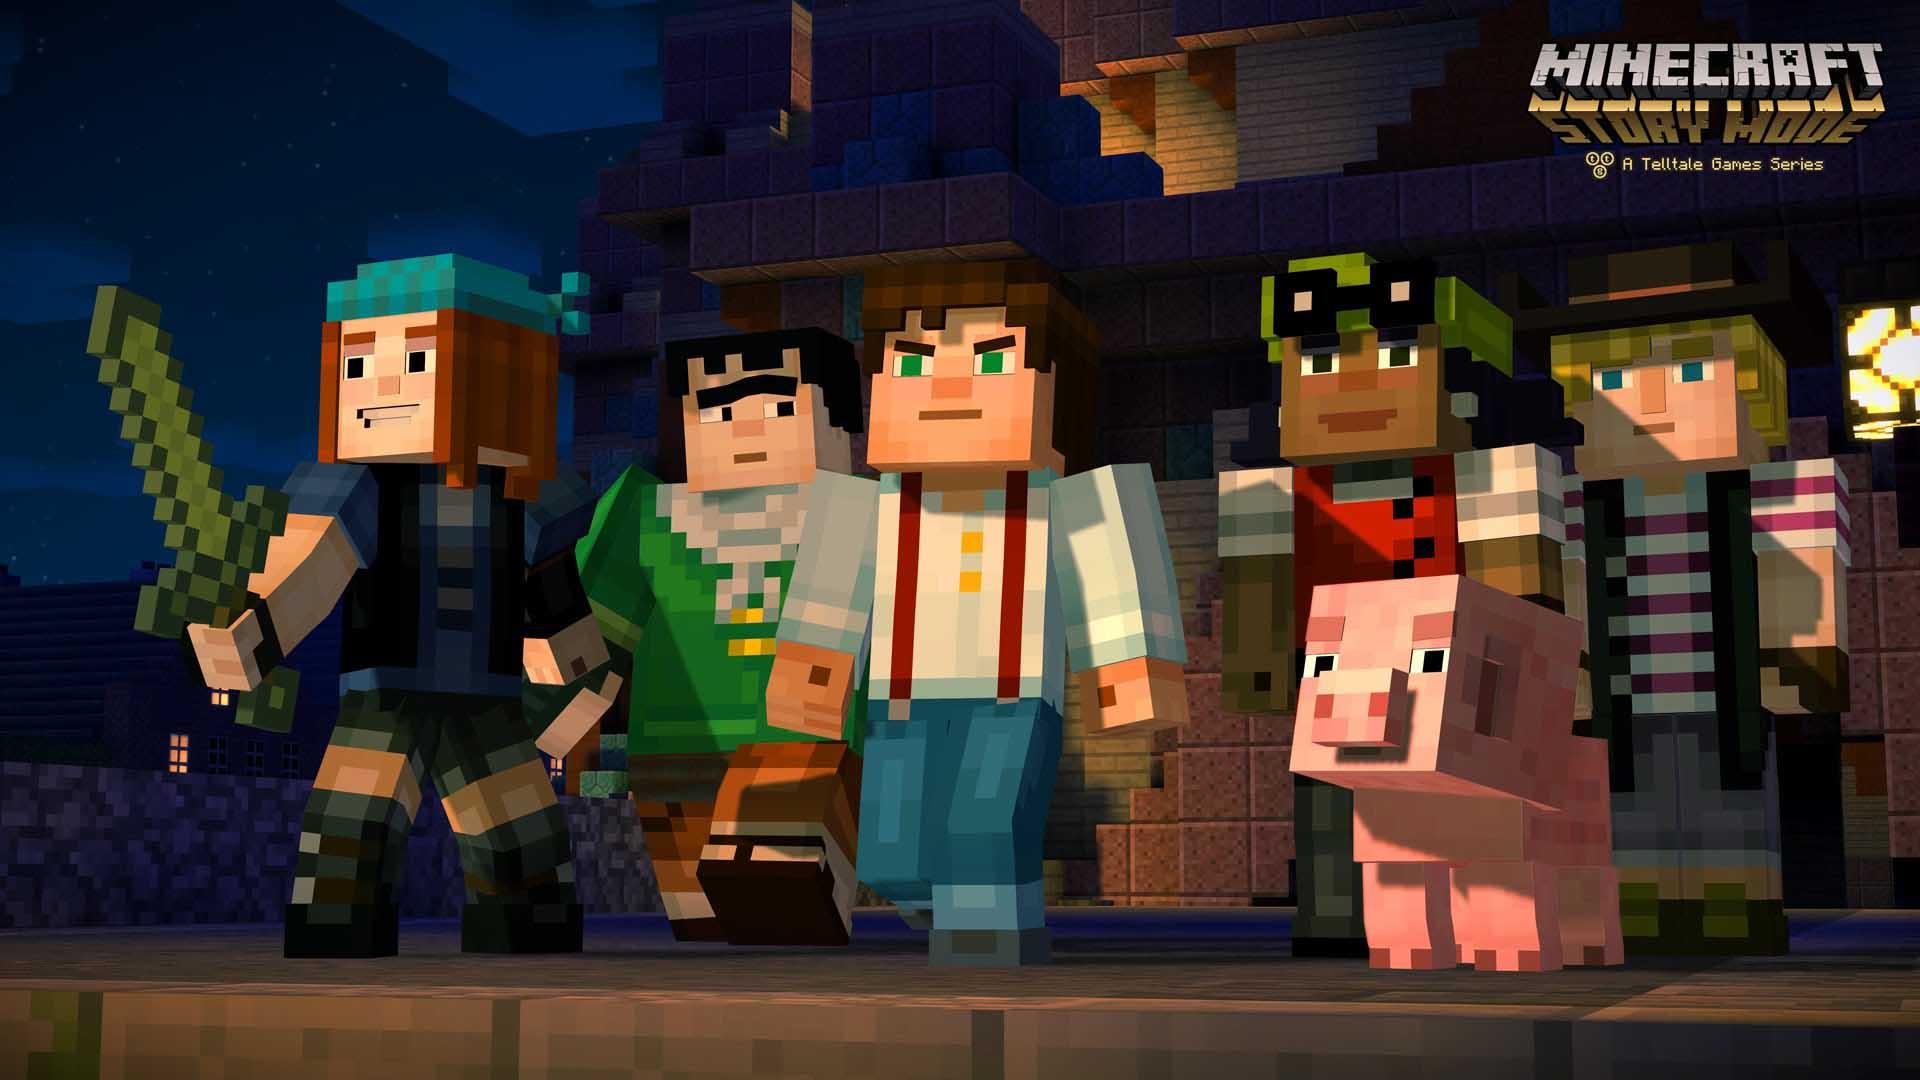 Minecraft: Story Mode sắp sửa đổ bộ lên Wii U